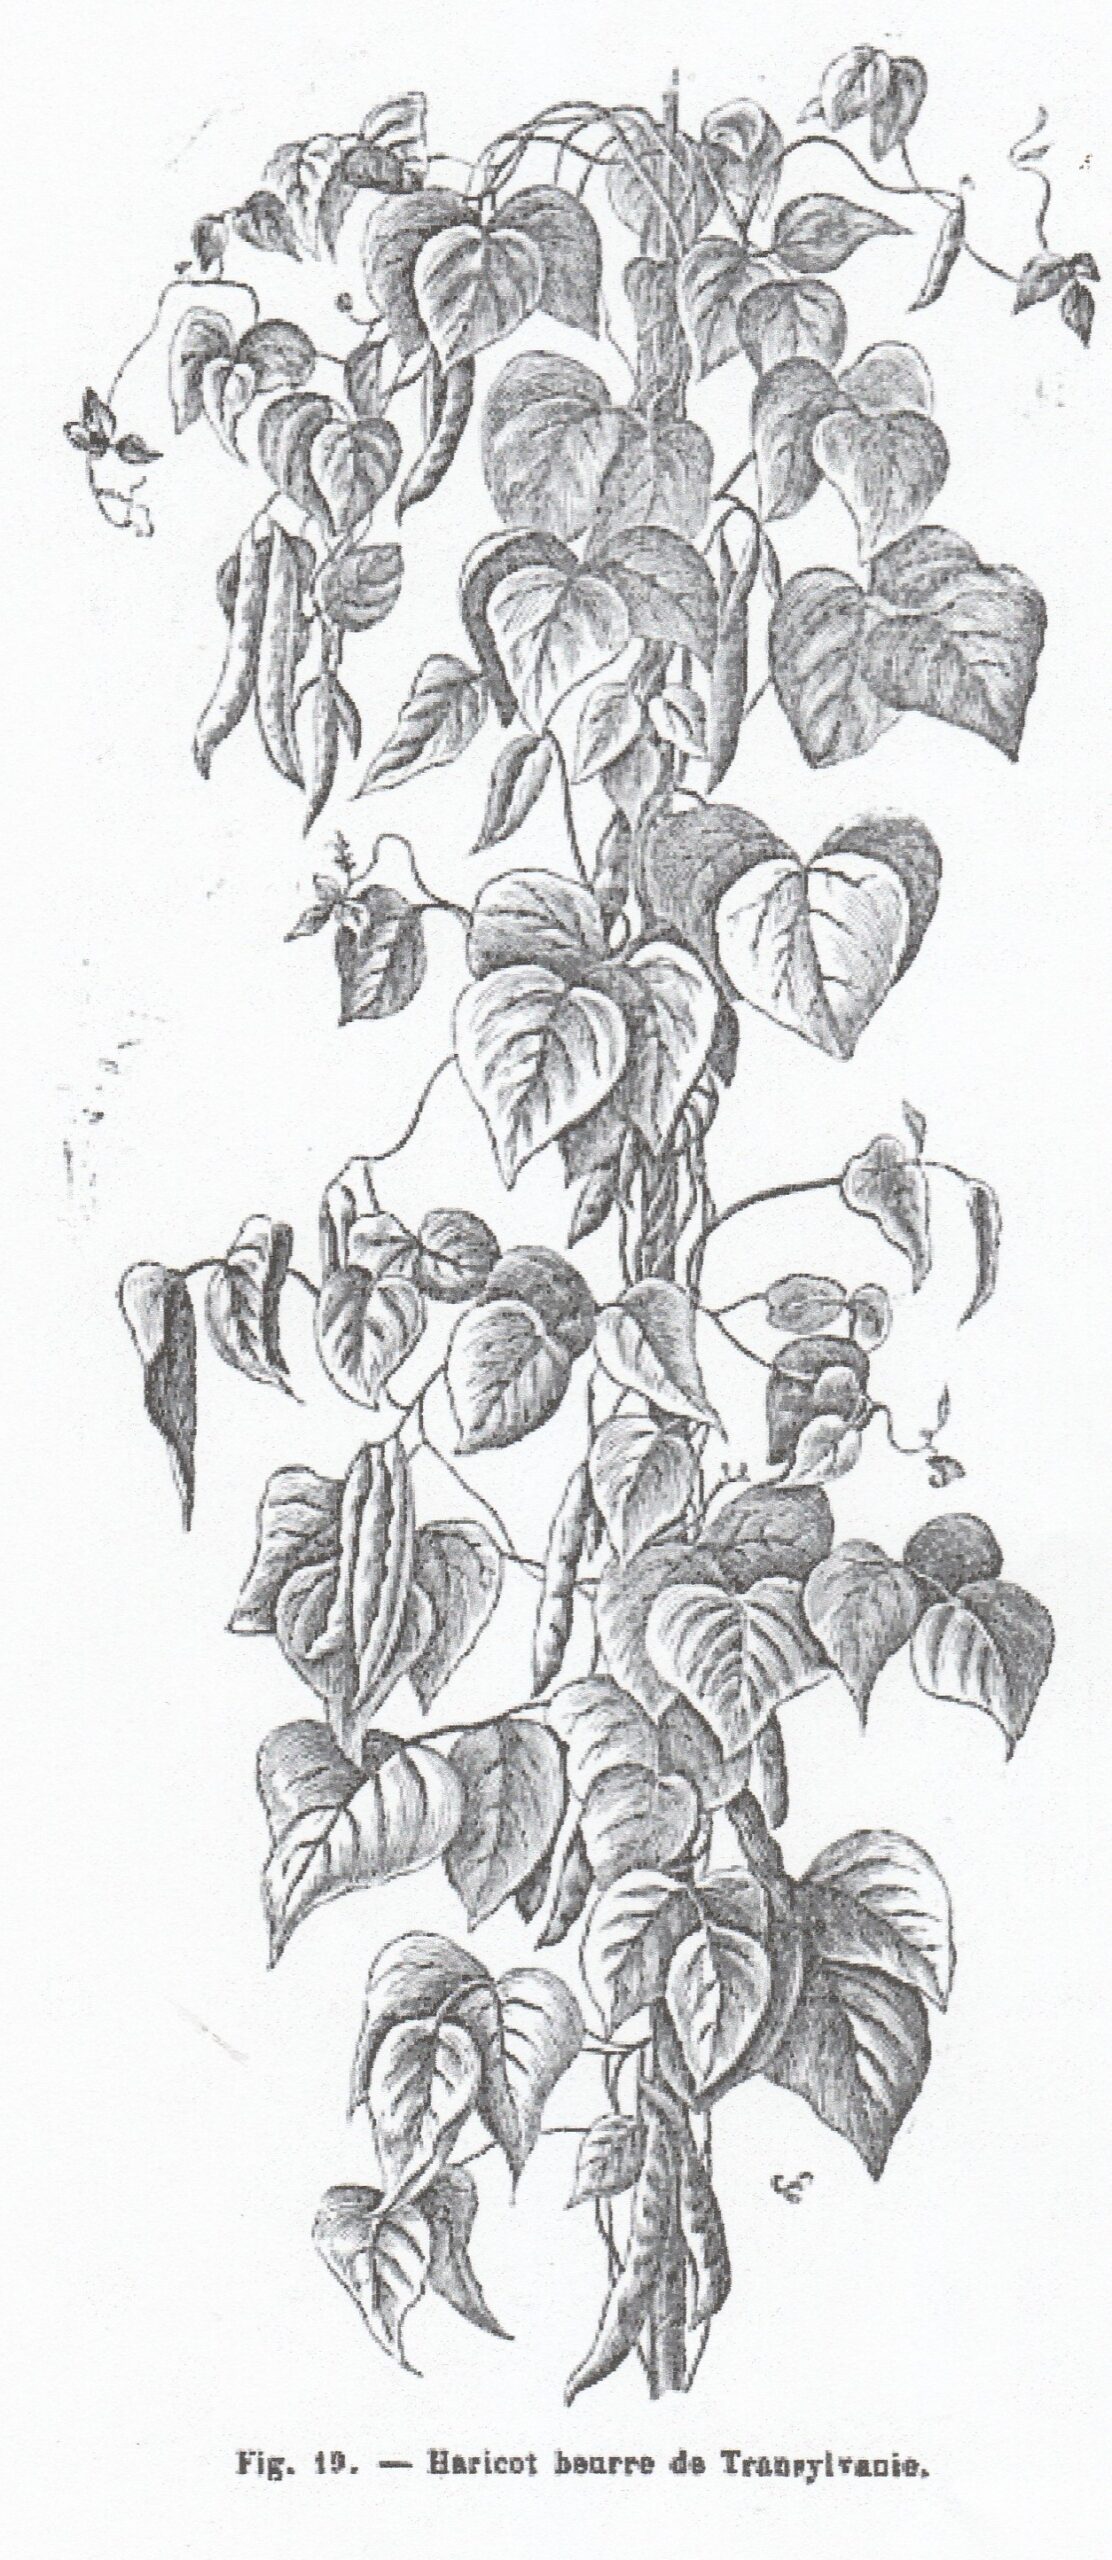 Transylvanie-Bull arb 1881-1